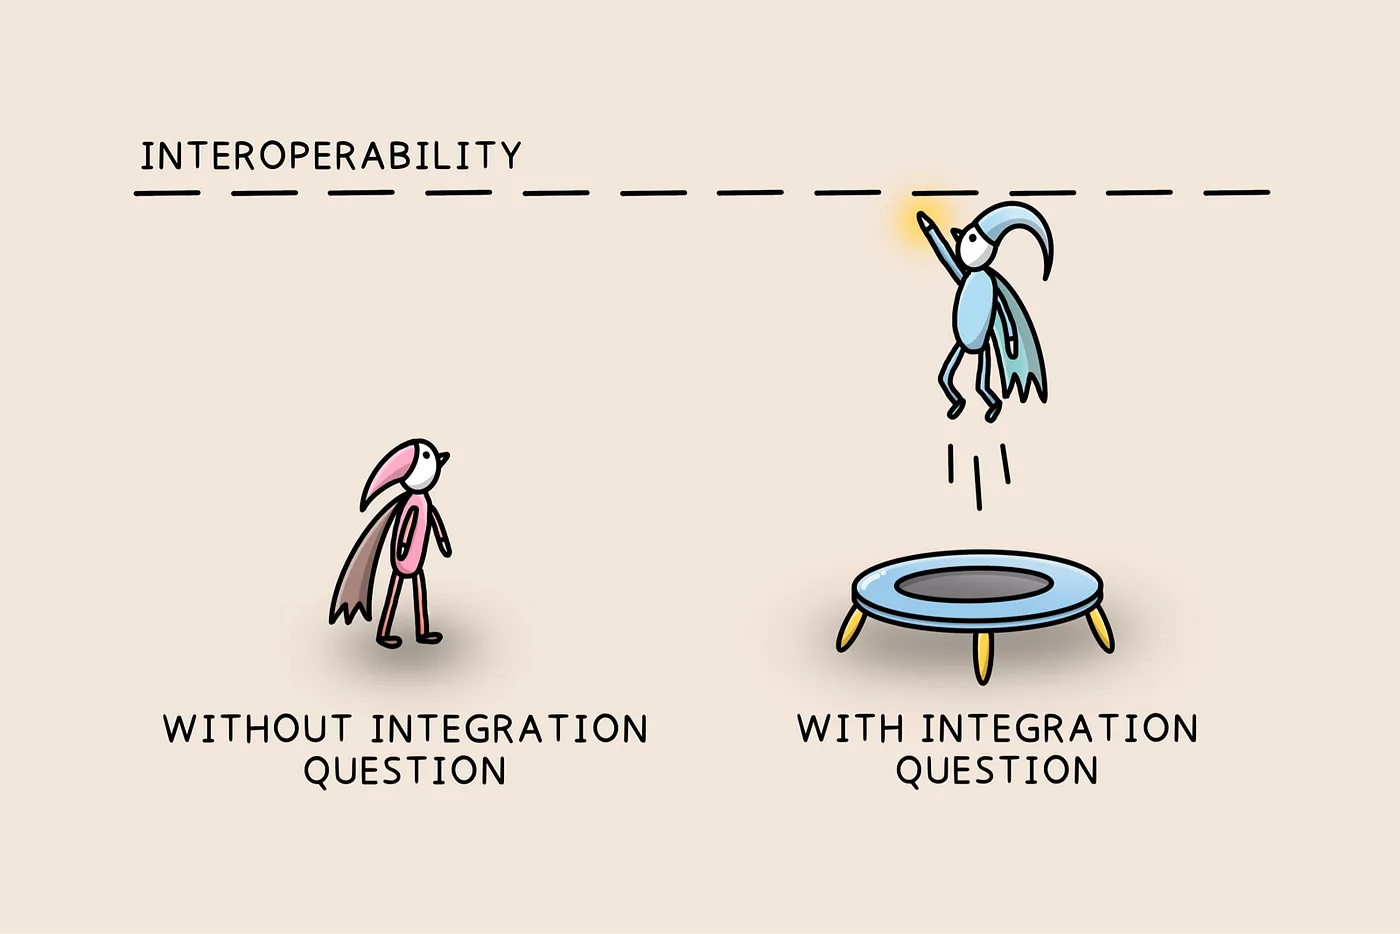 Integration question promotes interoperability